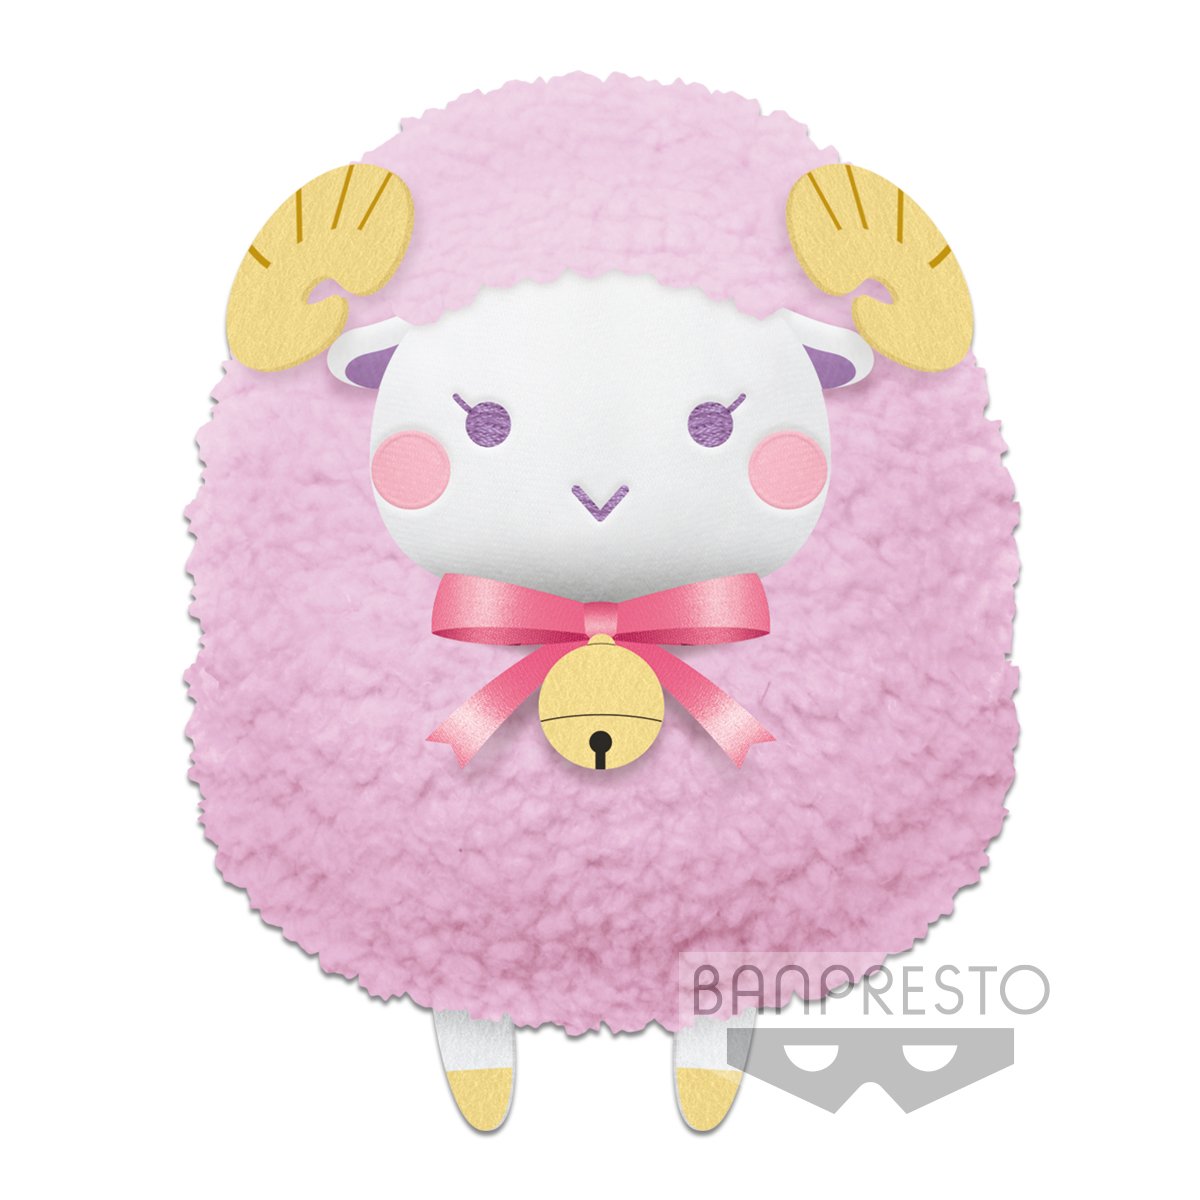 Obey Me! - Asmodeus Sheep Plush 8" image count 0